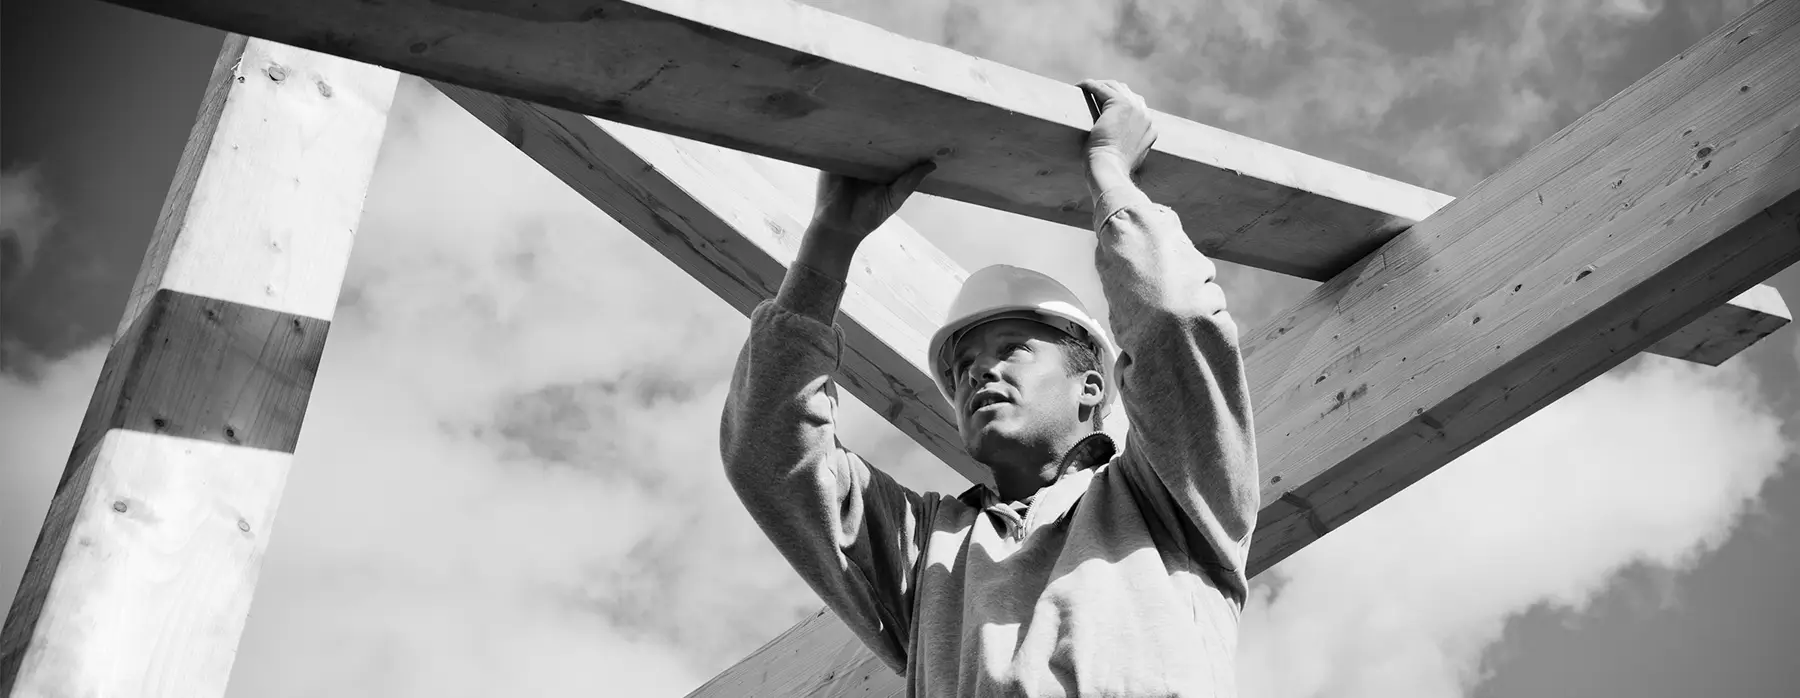 Construction worker holding beam overhead